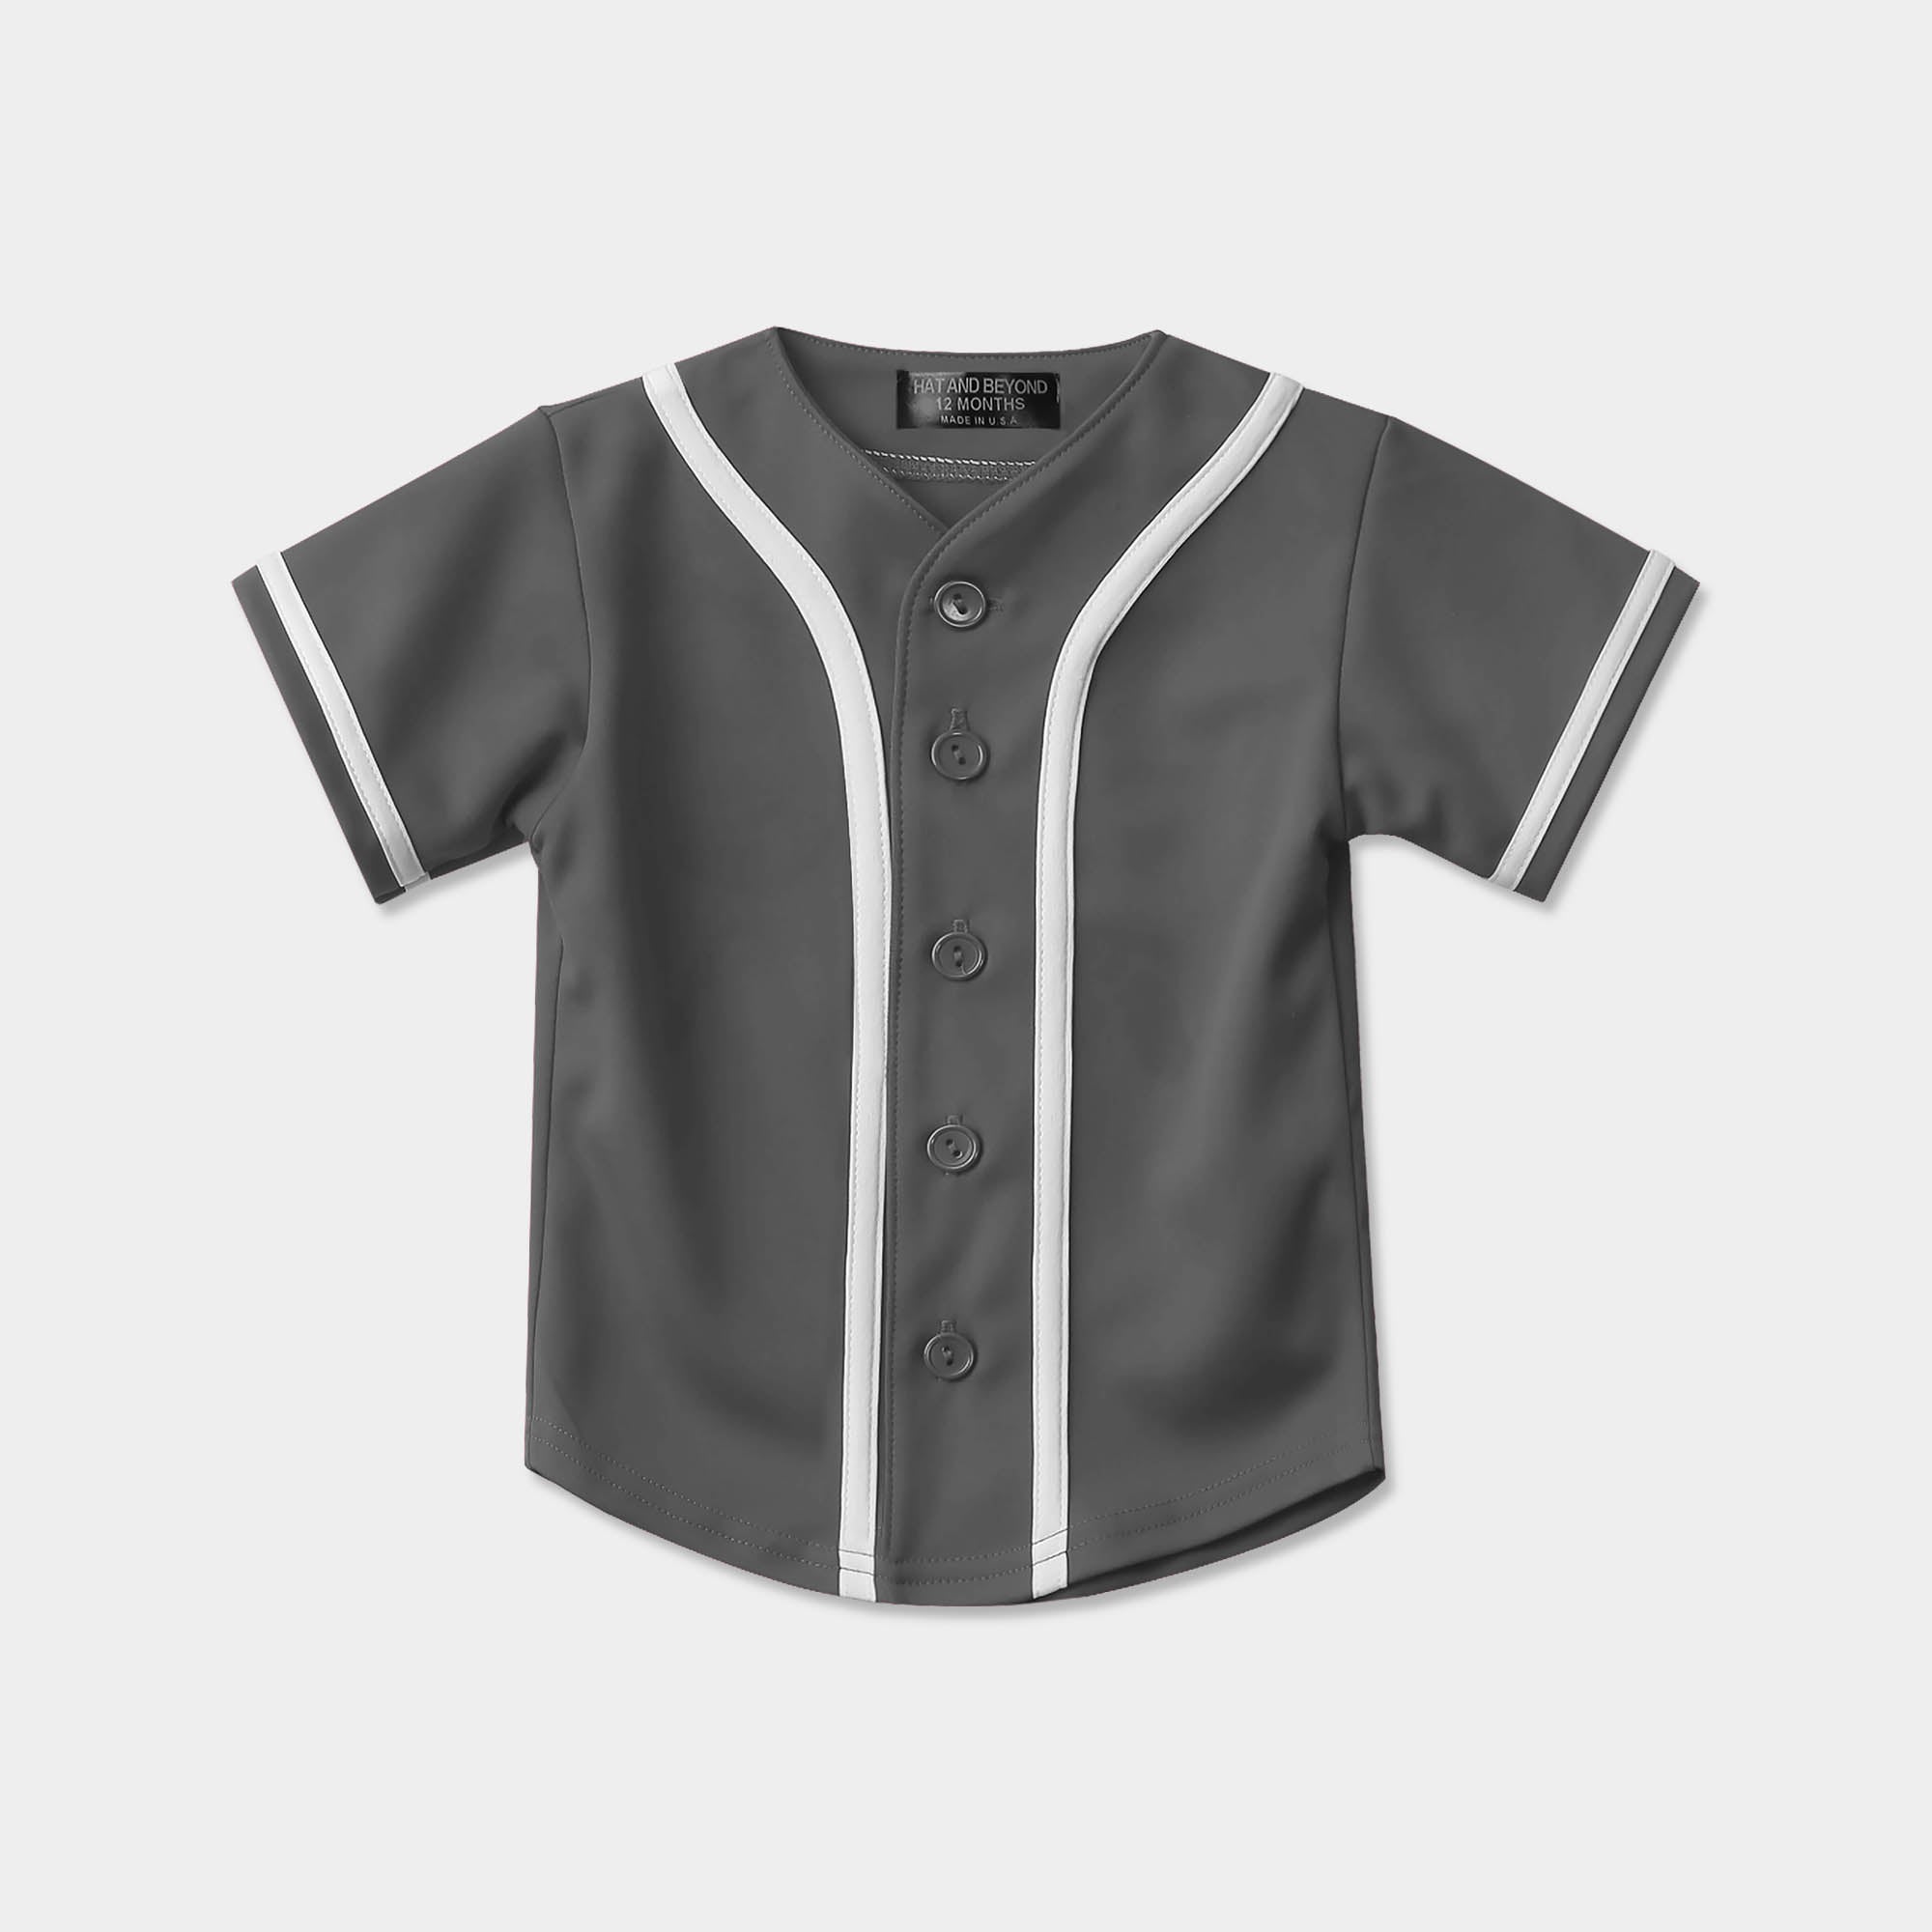 Kids White Black Baseball Jersey Button Down Jersey Majestic For Sports T  Shirt